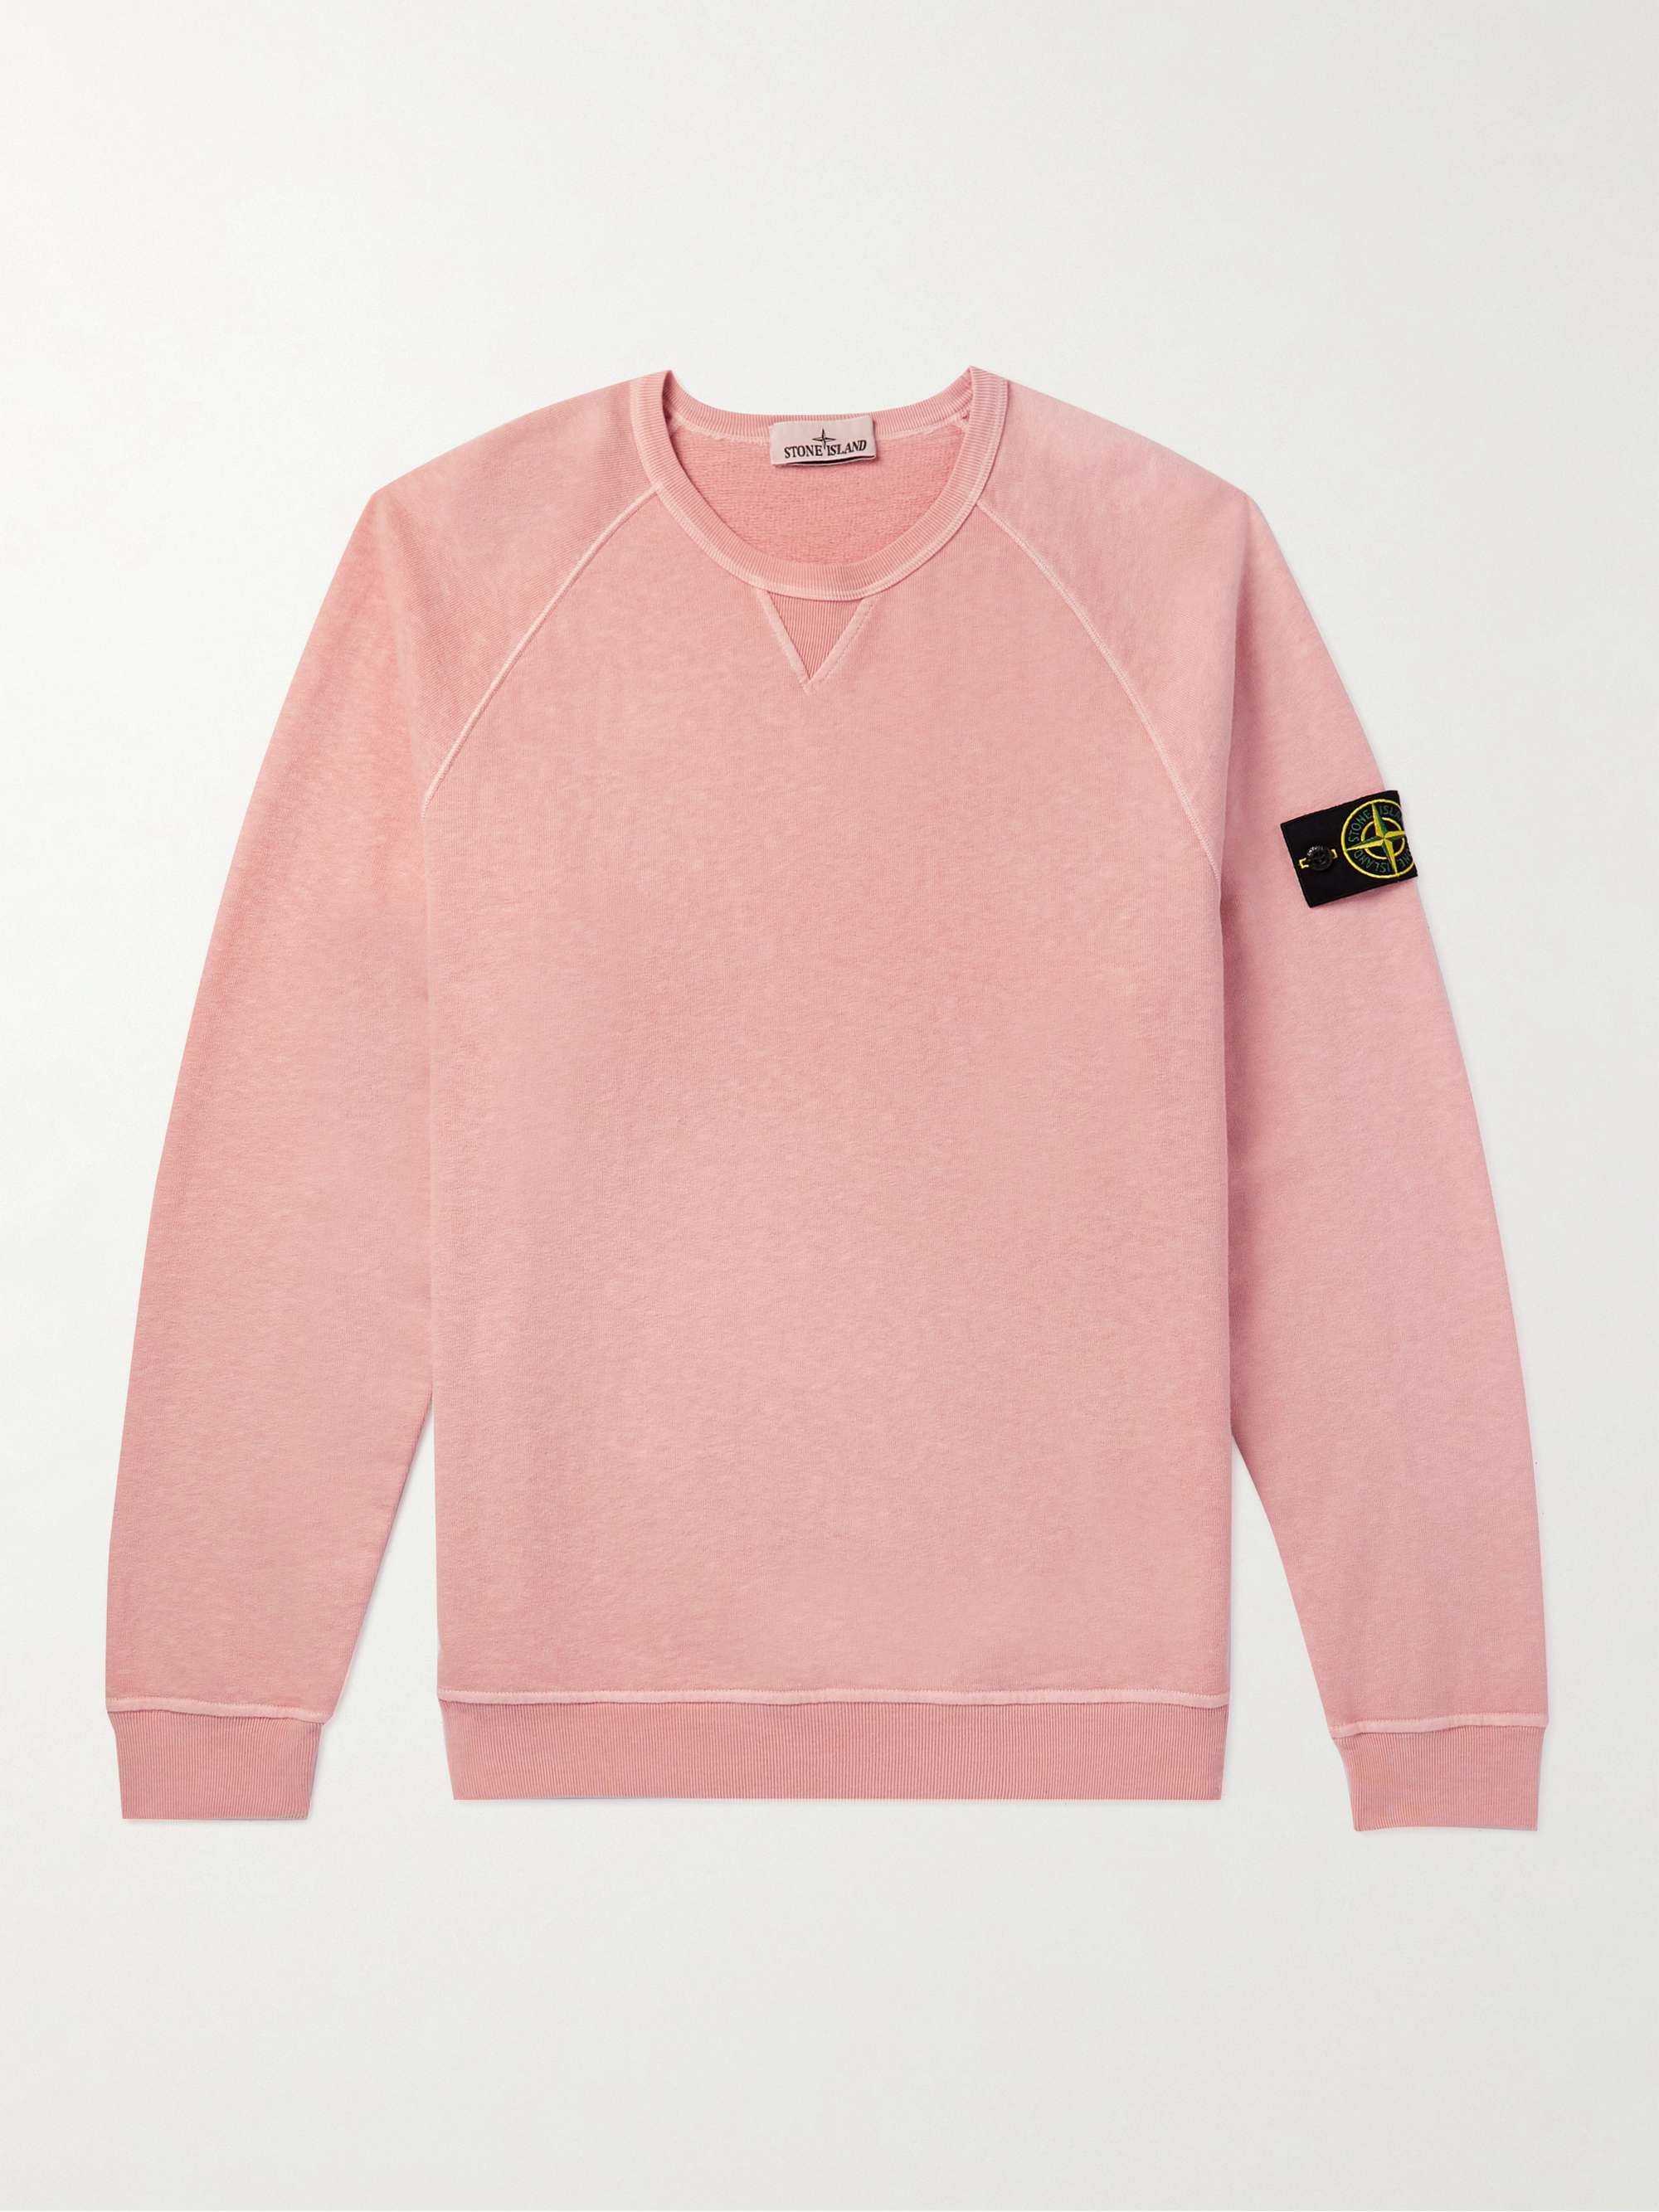 STONE ISLAND Logo-Appliqued Garment-Dyed Cotton-Jersey Sweatshirt,Pink